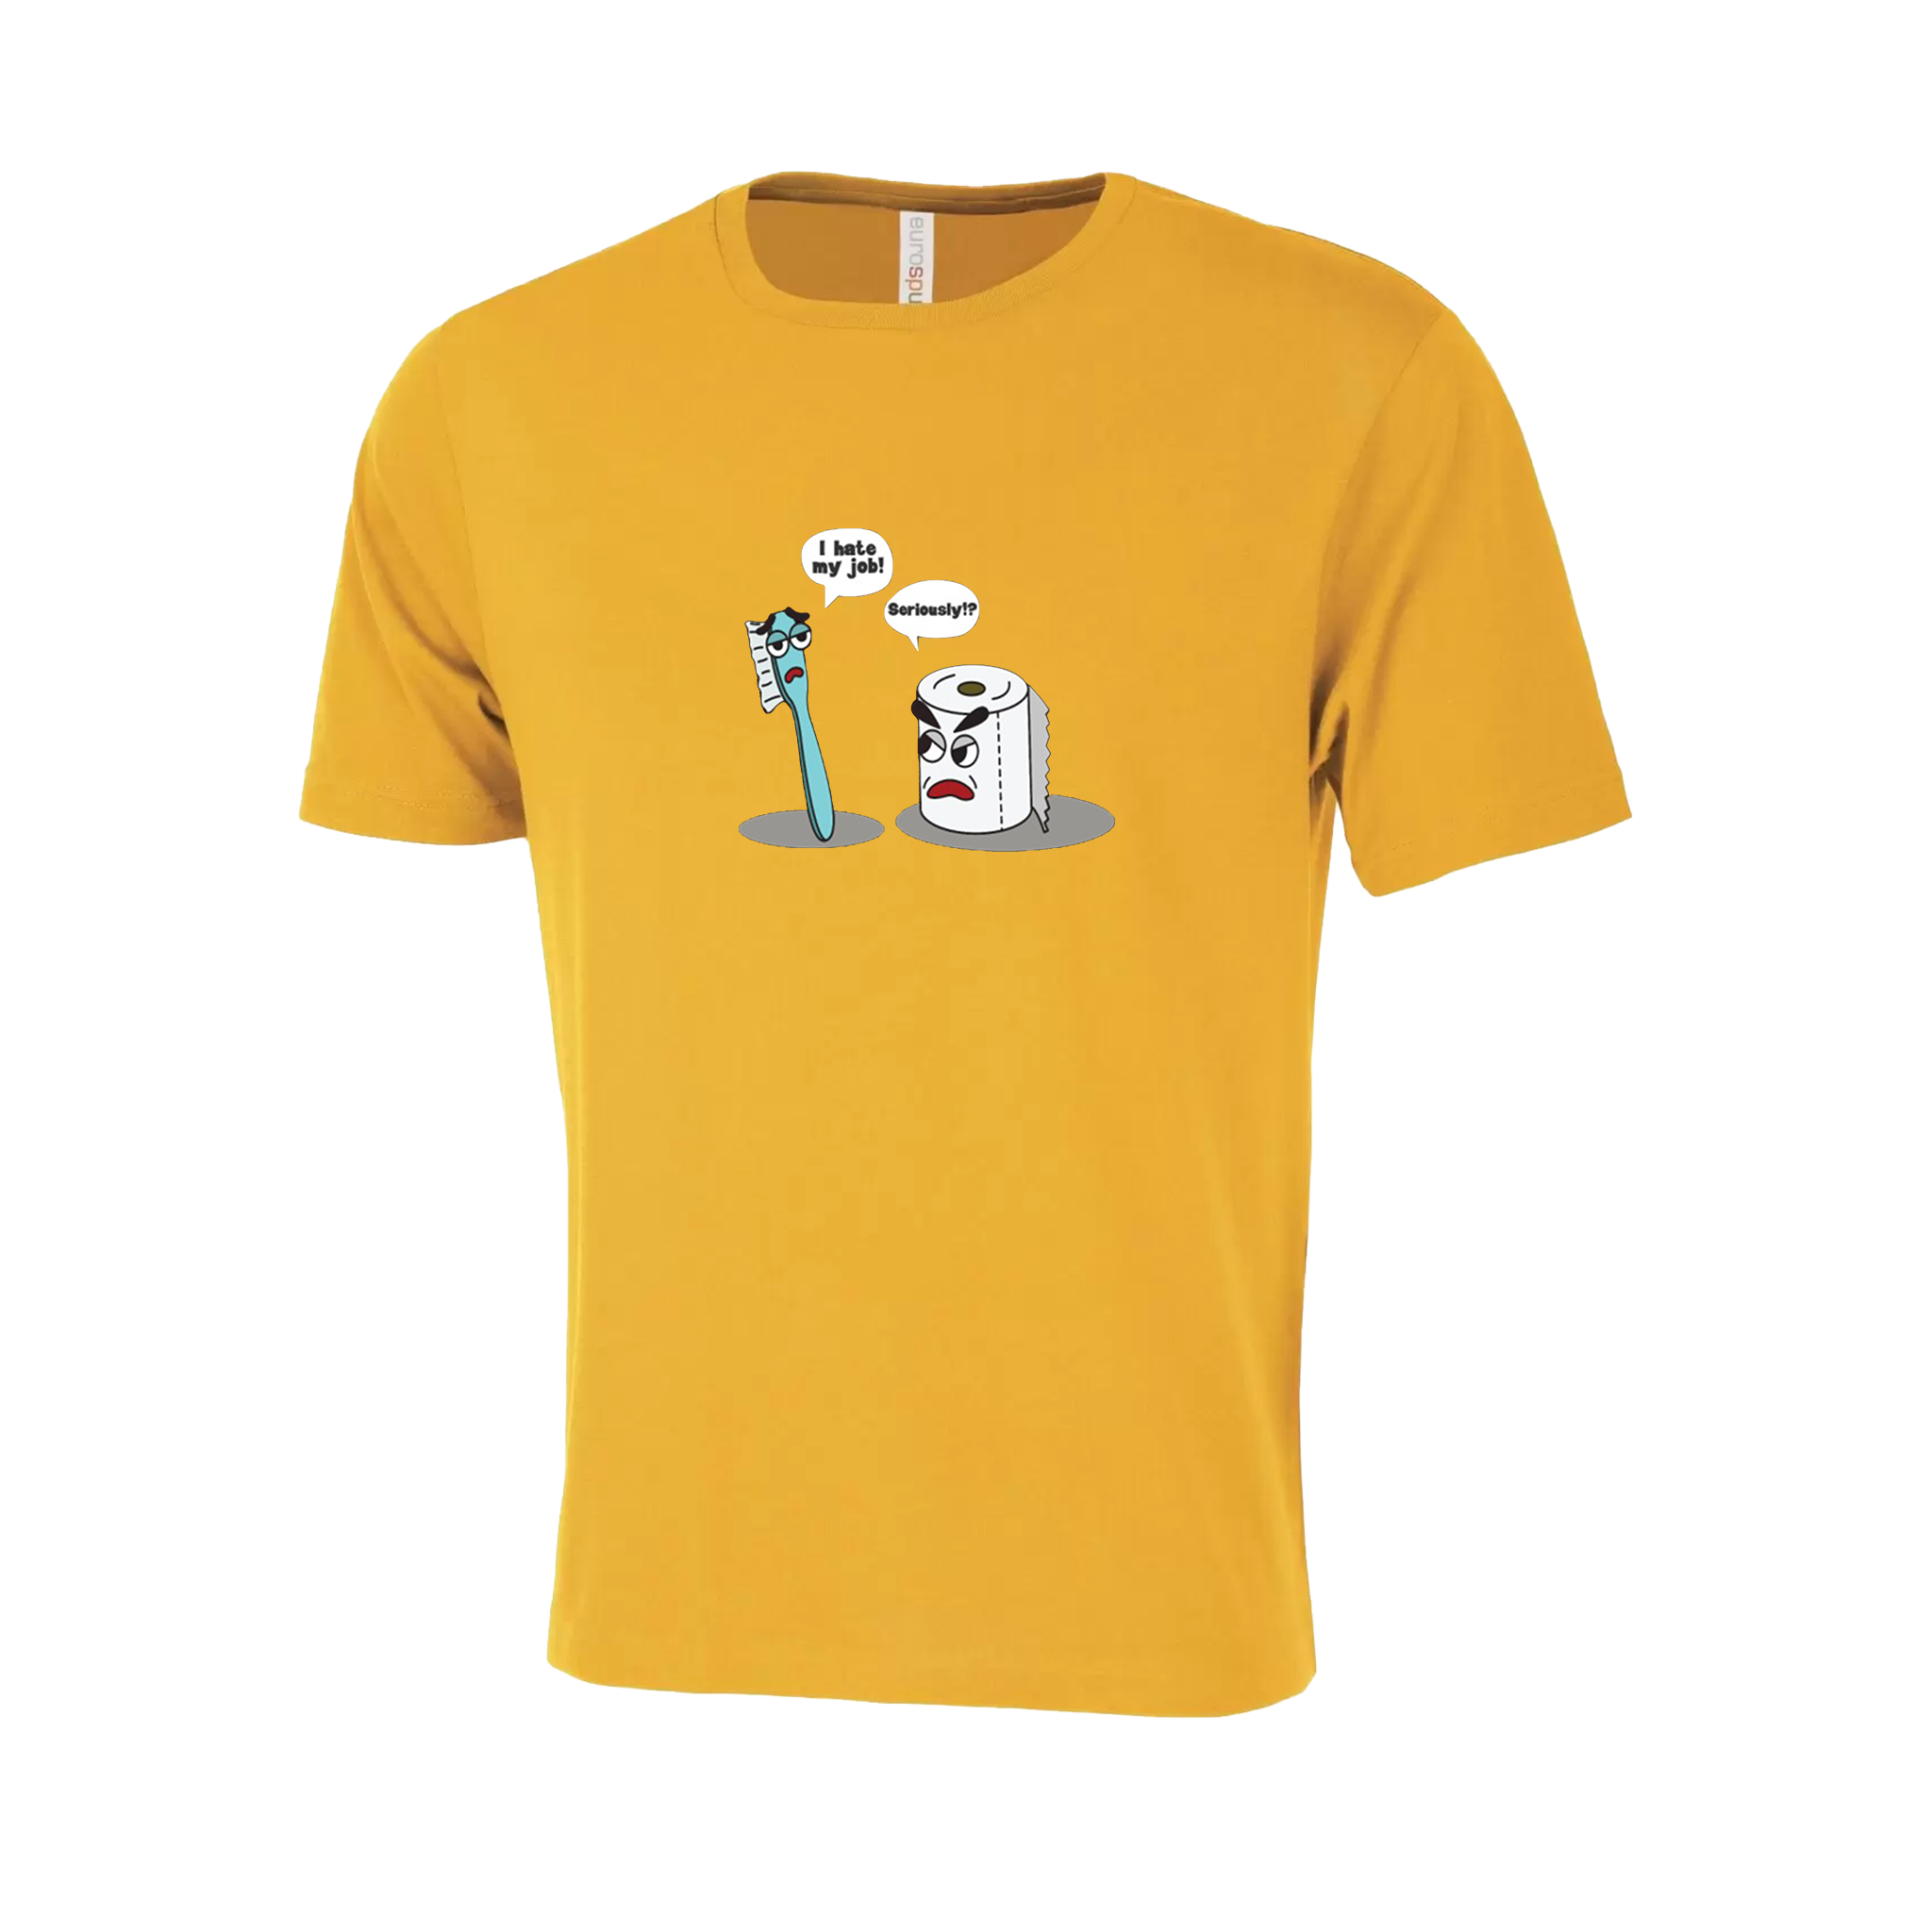 Toilet Humor Novelty T-Shirt - Adult Unisex Sizing XS-4XL - Gold